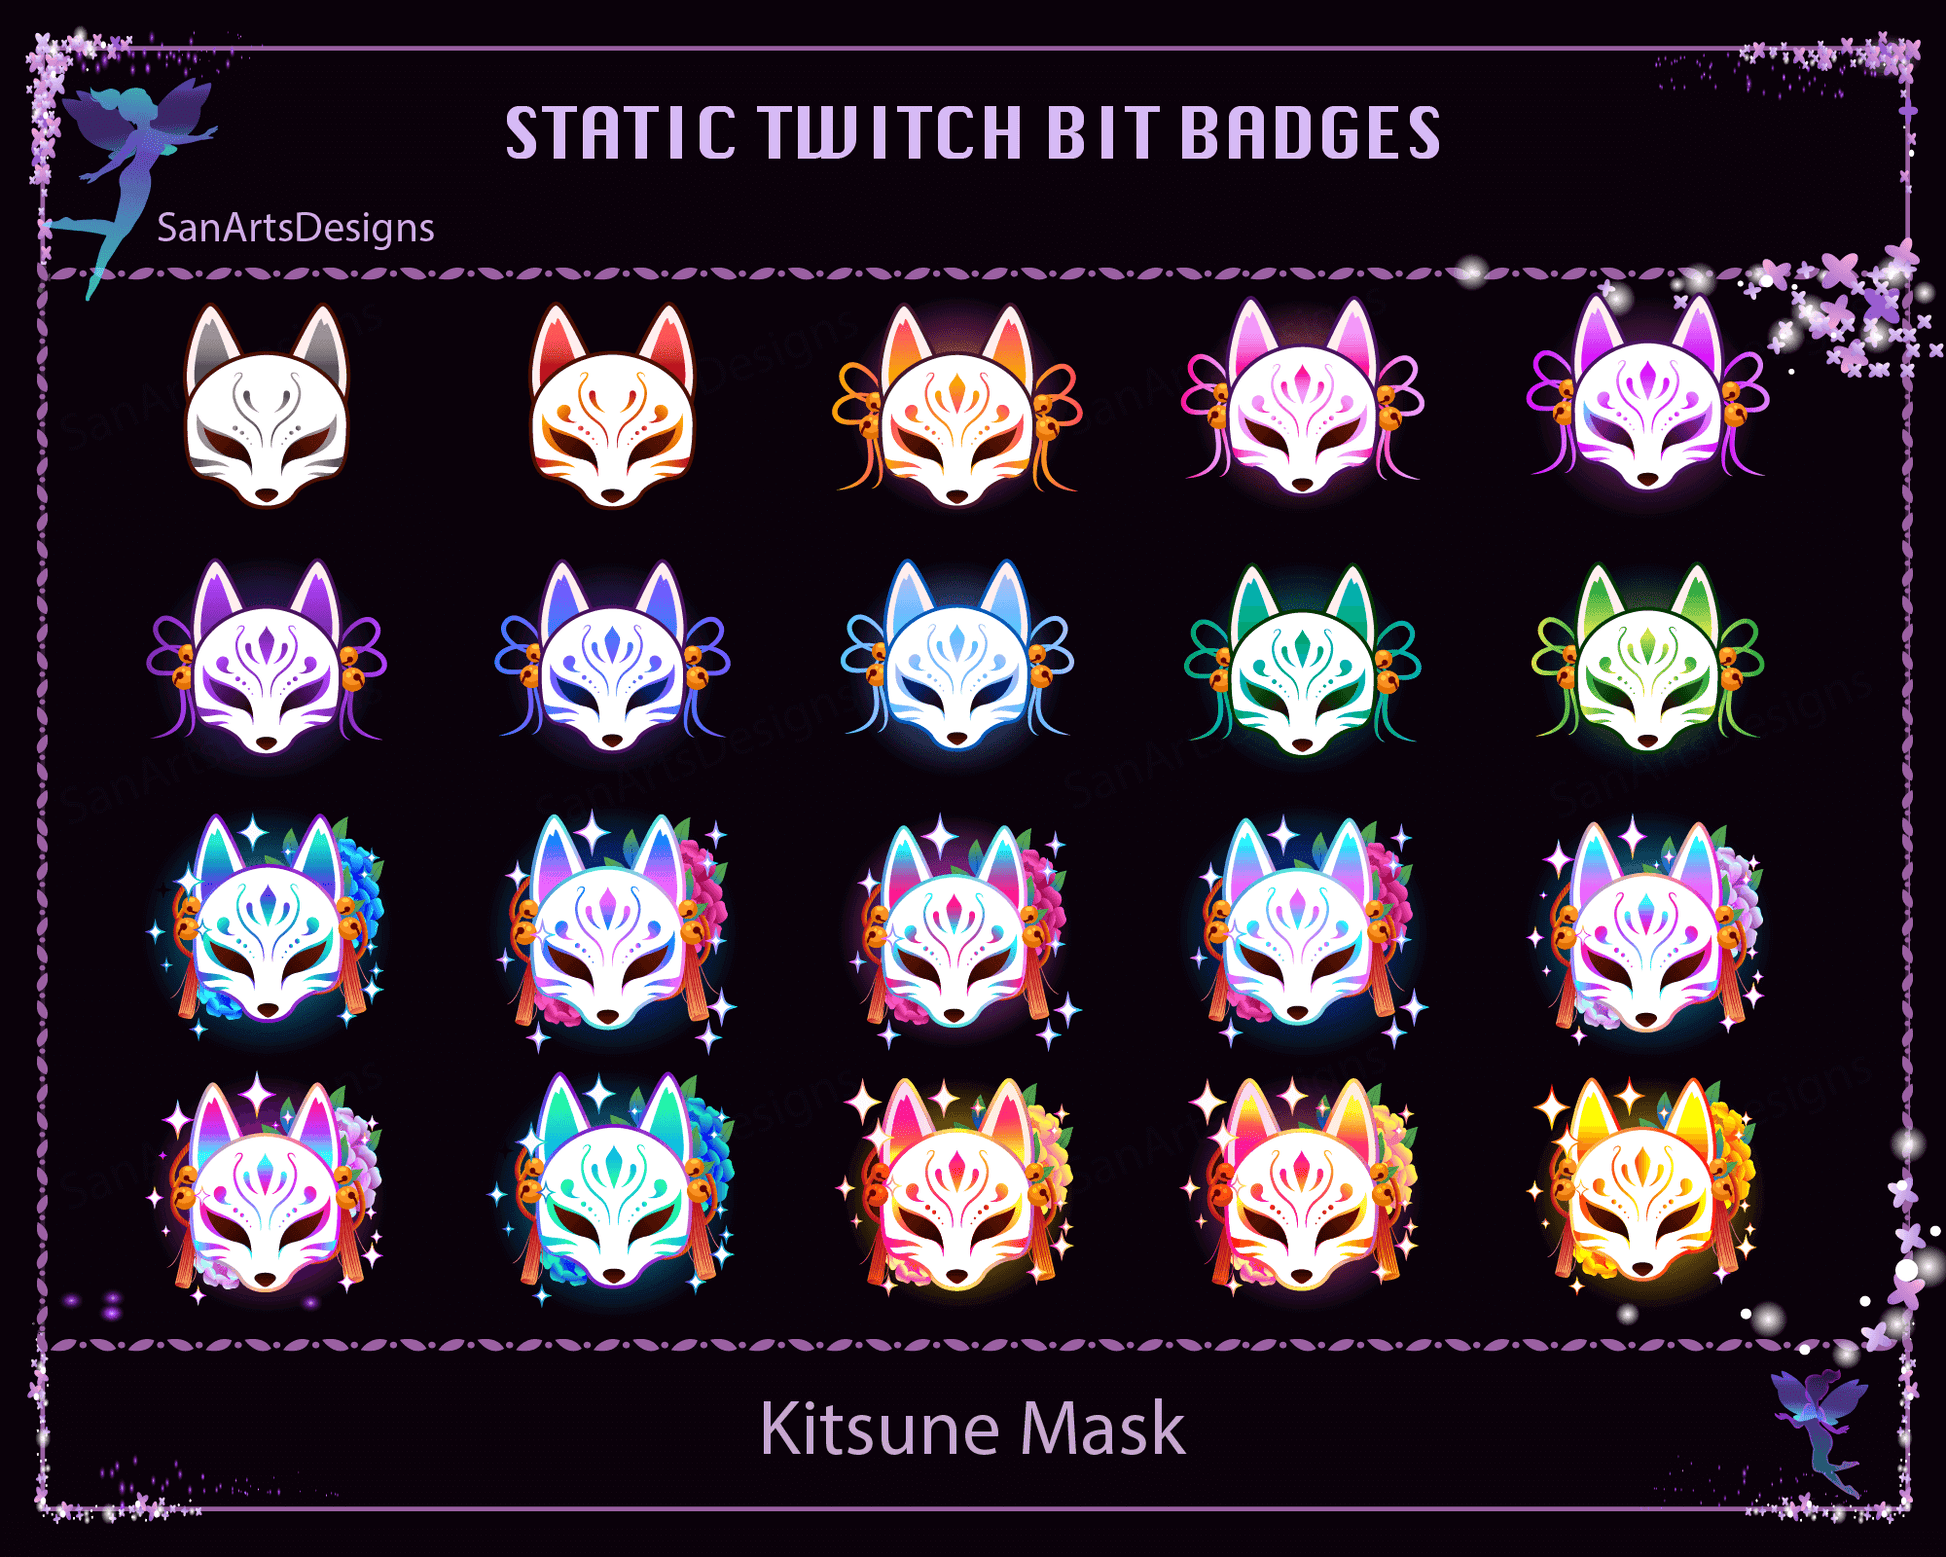 Kitsune Mask Twitch Bit Badges - BitBadges - Stream K-Arts